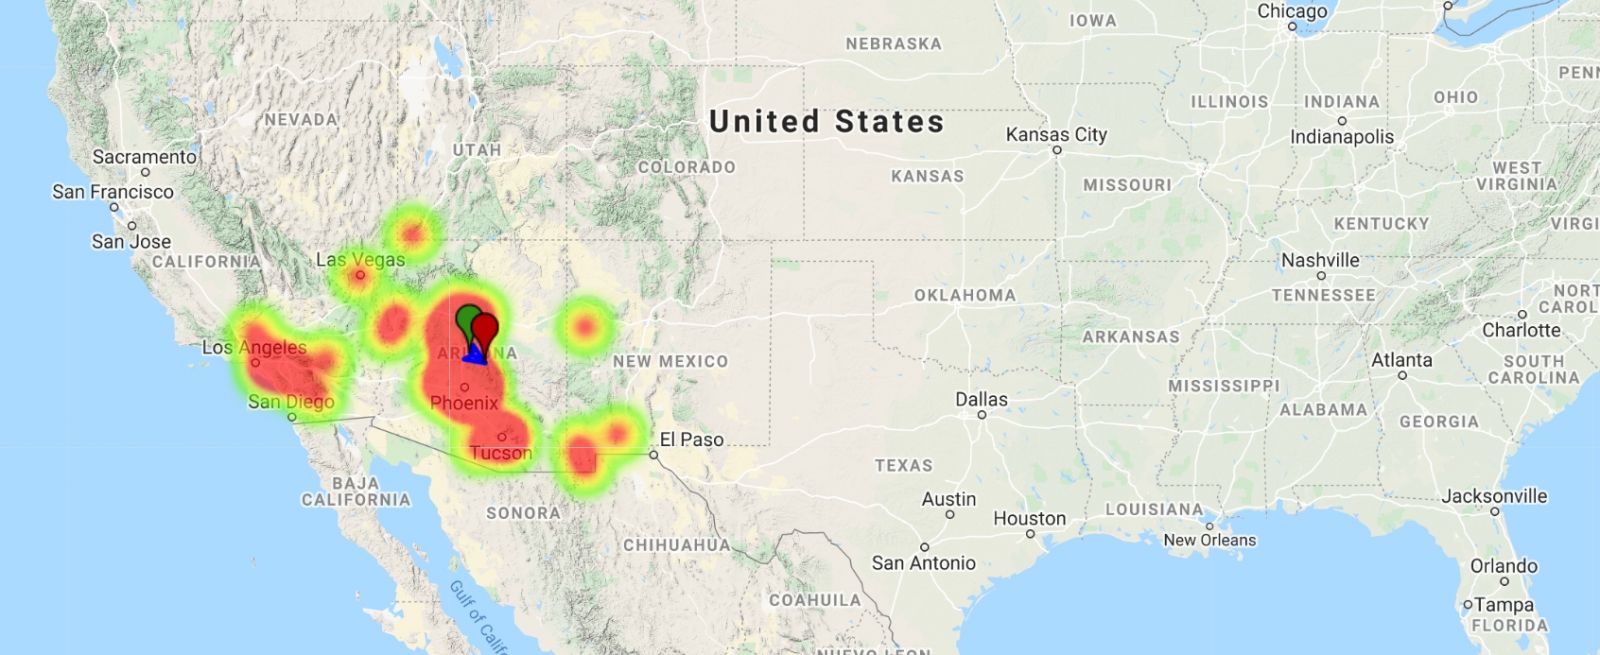 fireball-heatmap-feb-26-2020-southwest-US